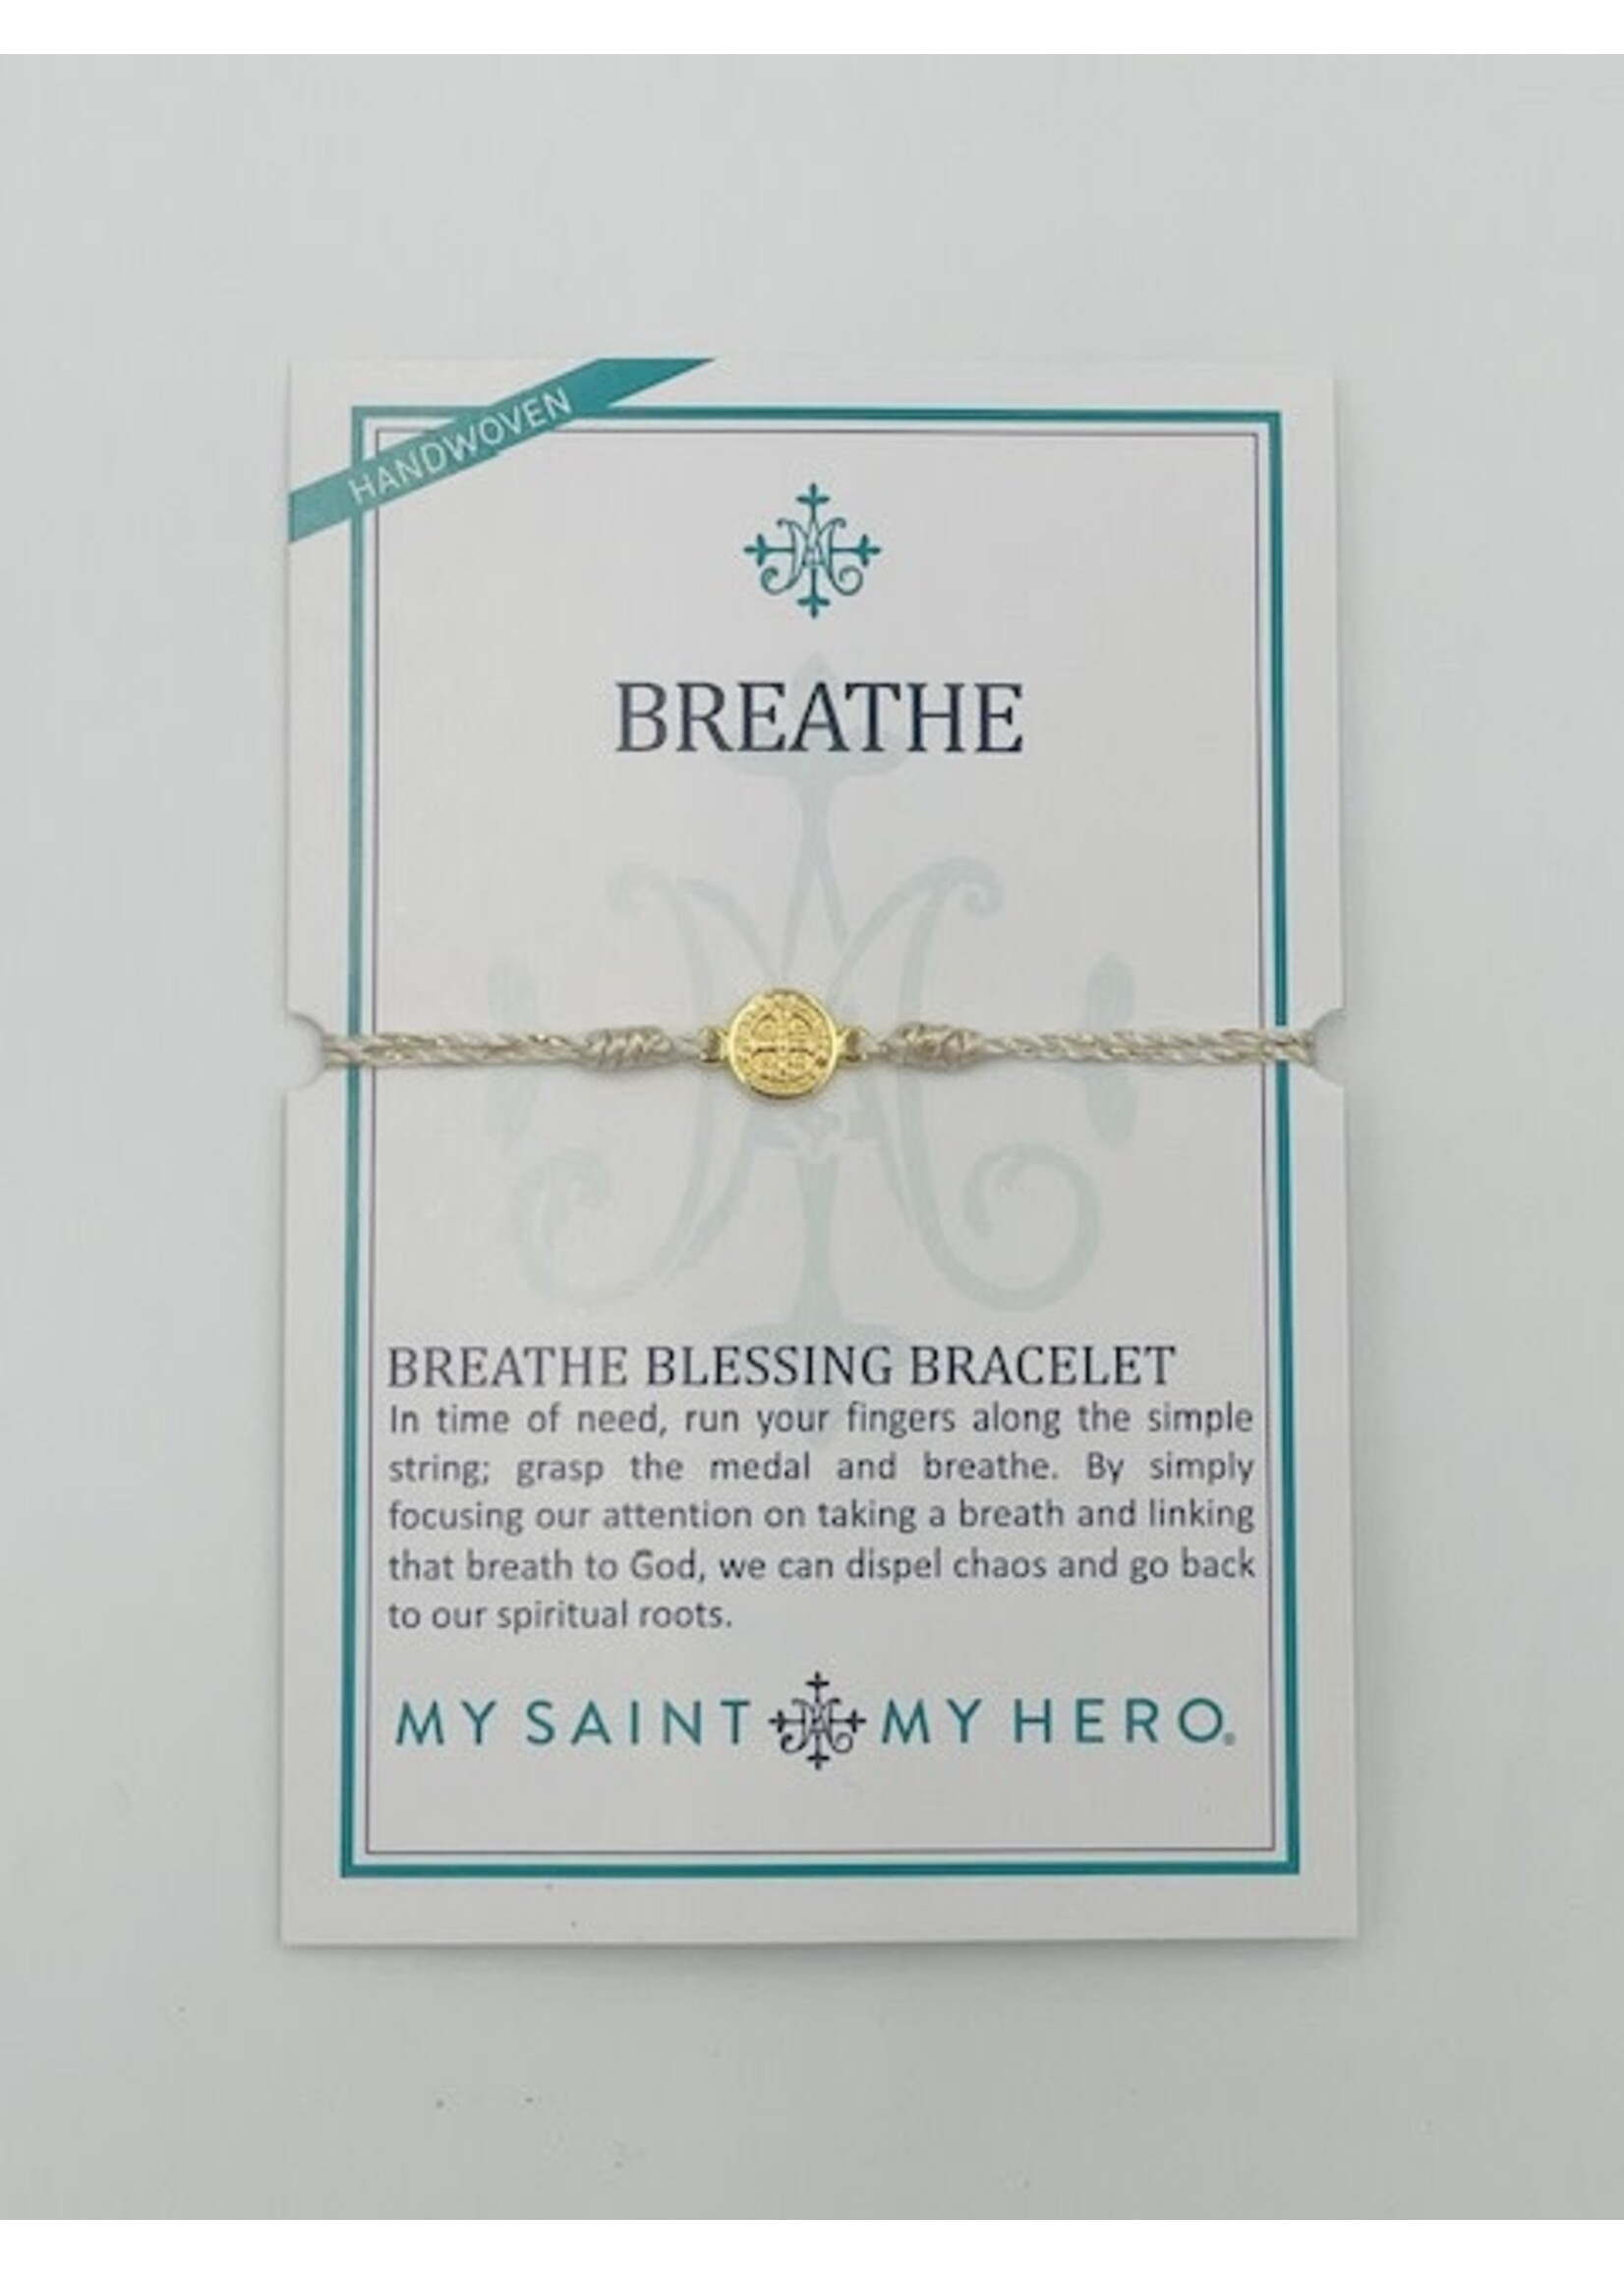 My Saint My Hero Breathe Benedictine Blessing Bracelet - gold thread/tone